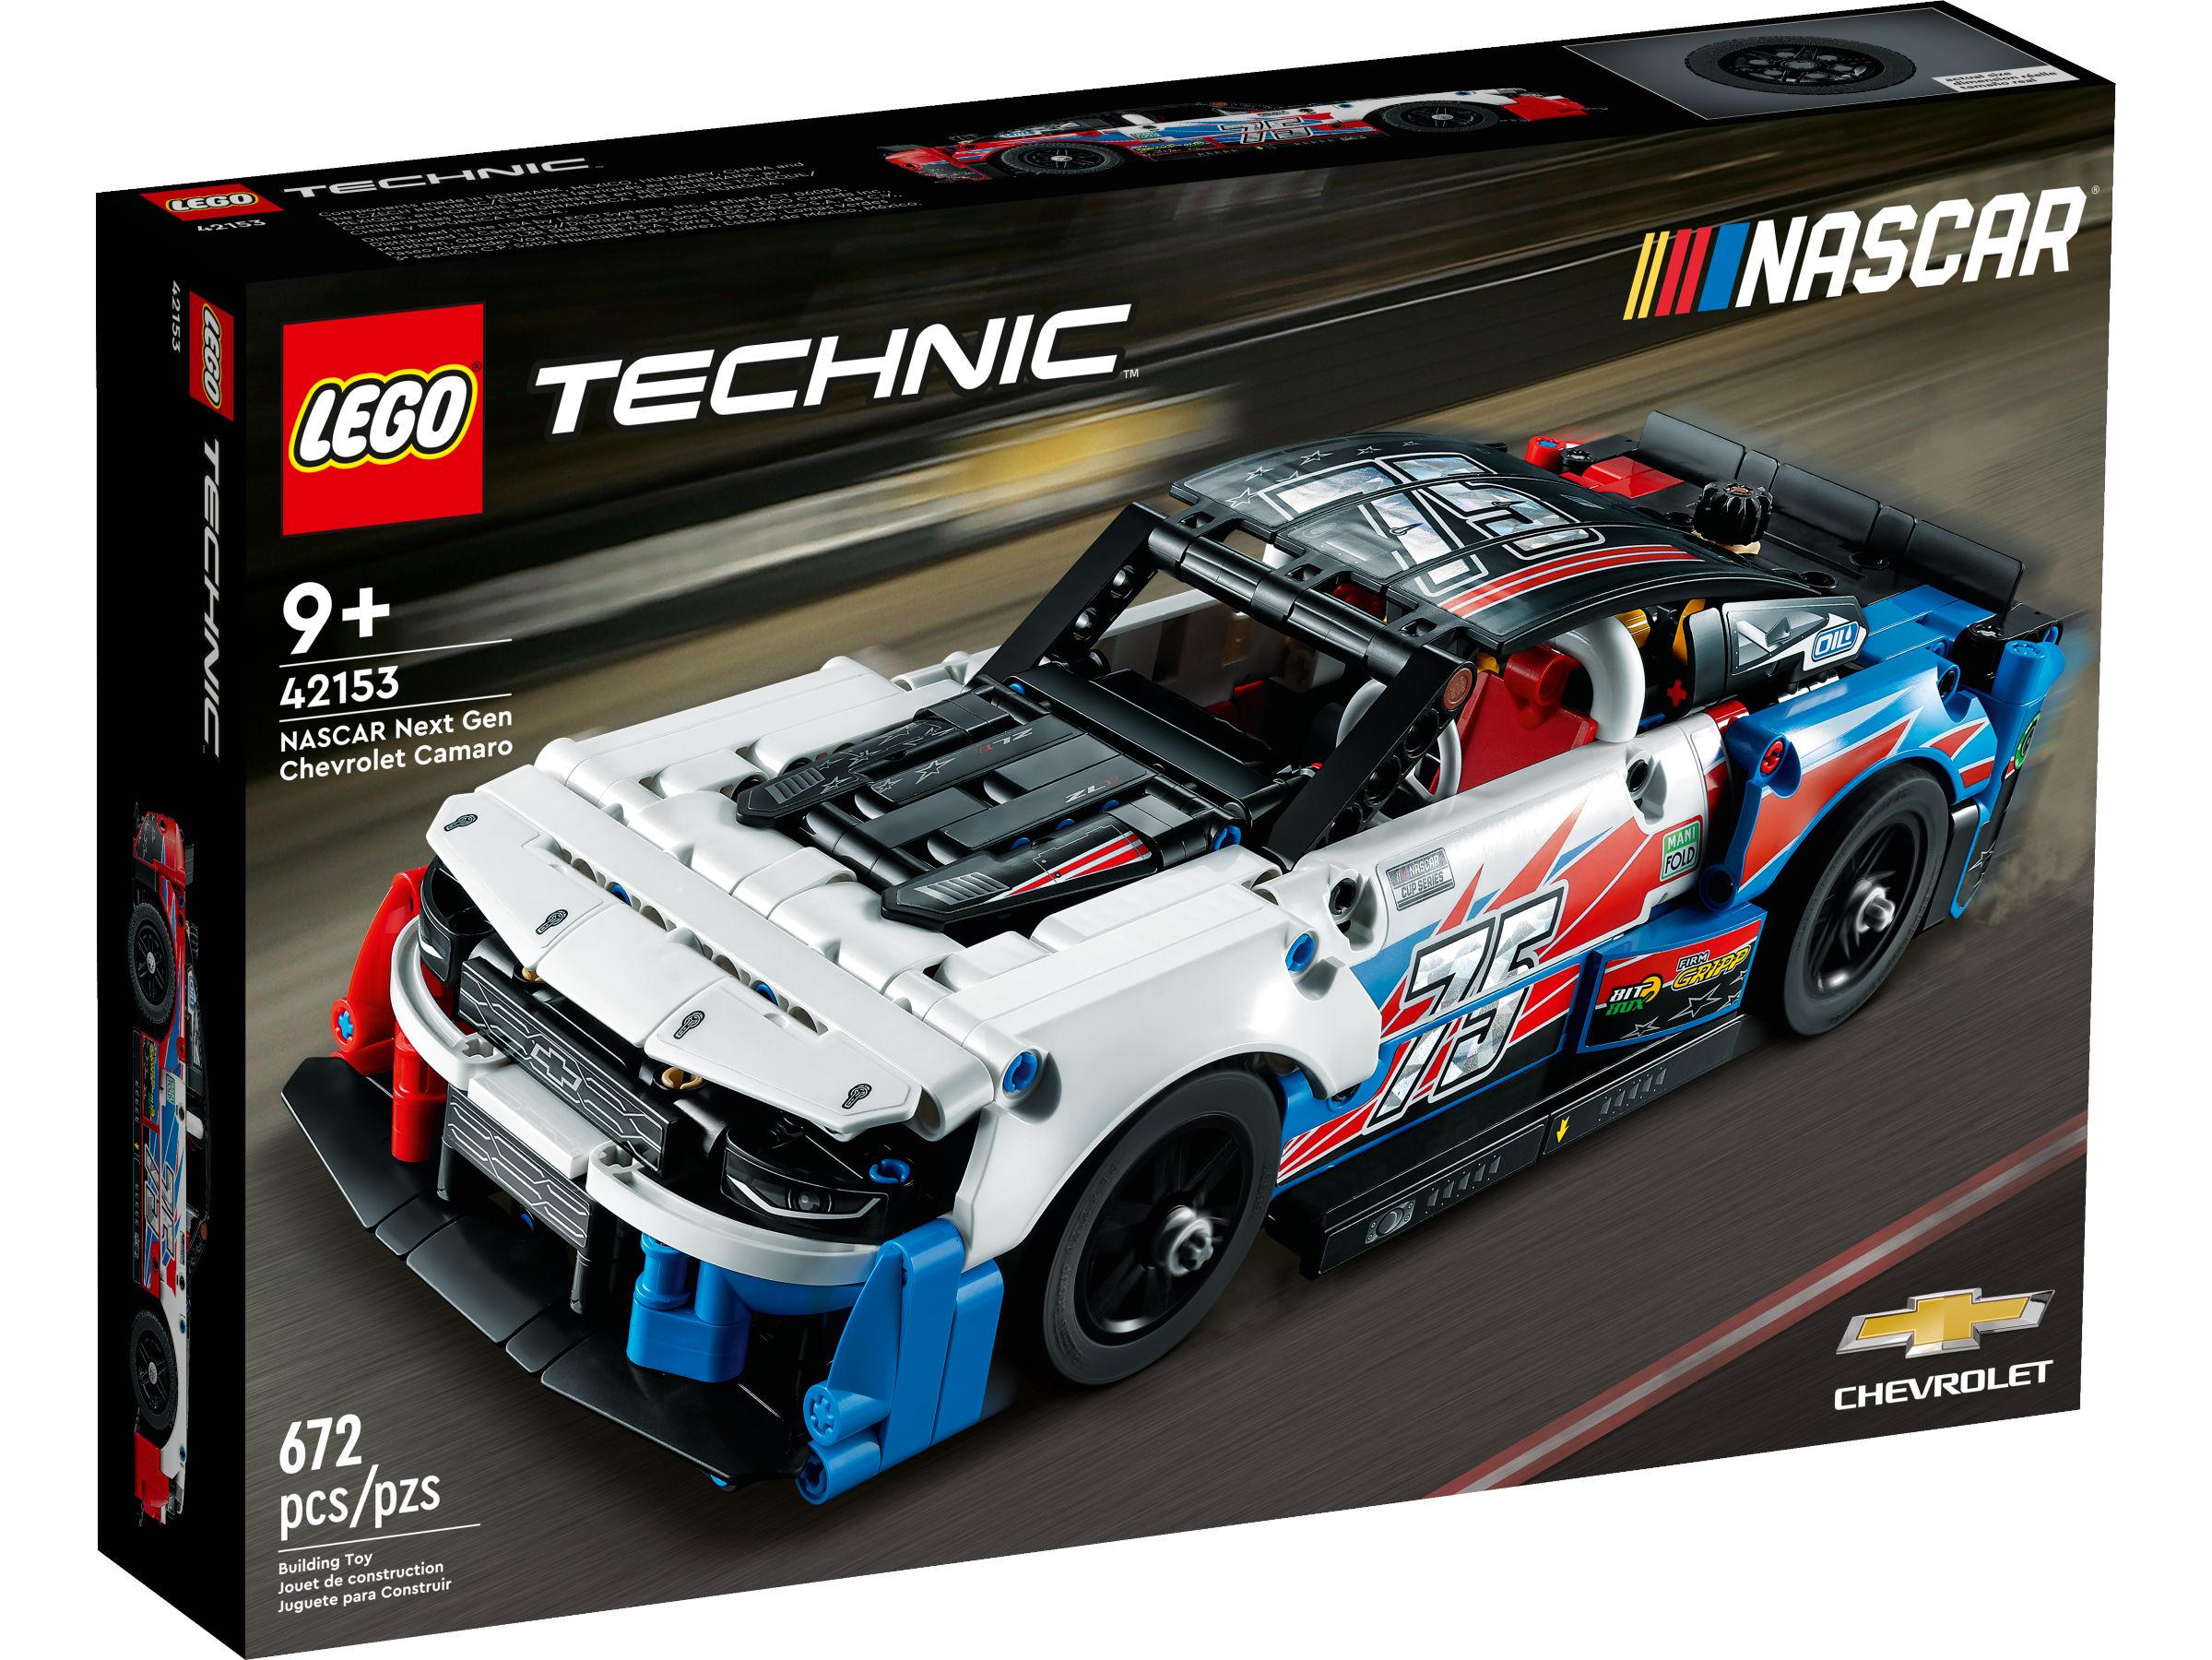 LEGO Technic 42153 NASCAR Next Gen Chevrolet Camaro ZL1 LEGO_42153_alt1.jpg